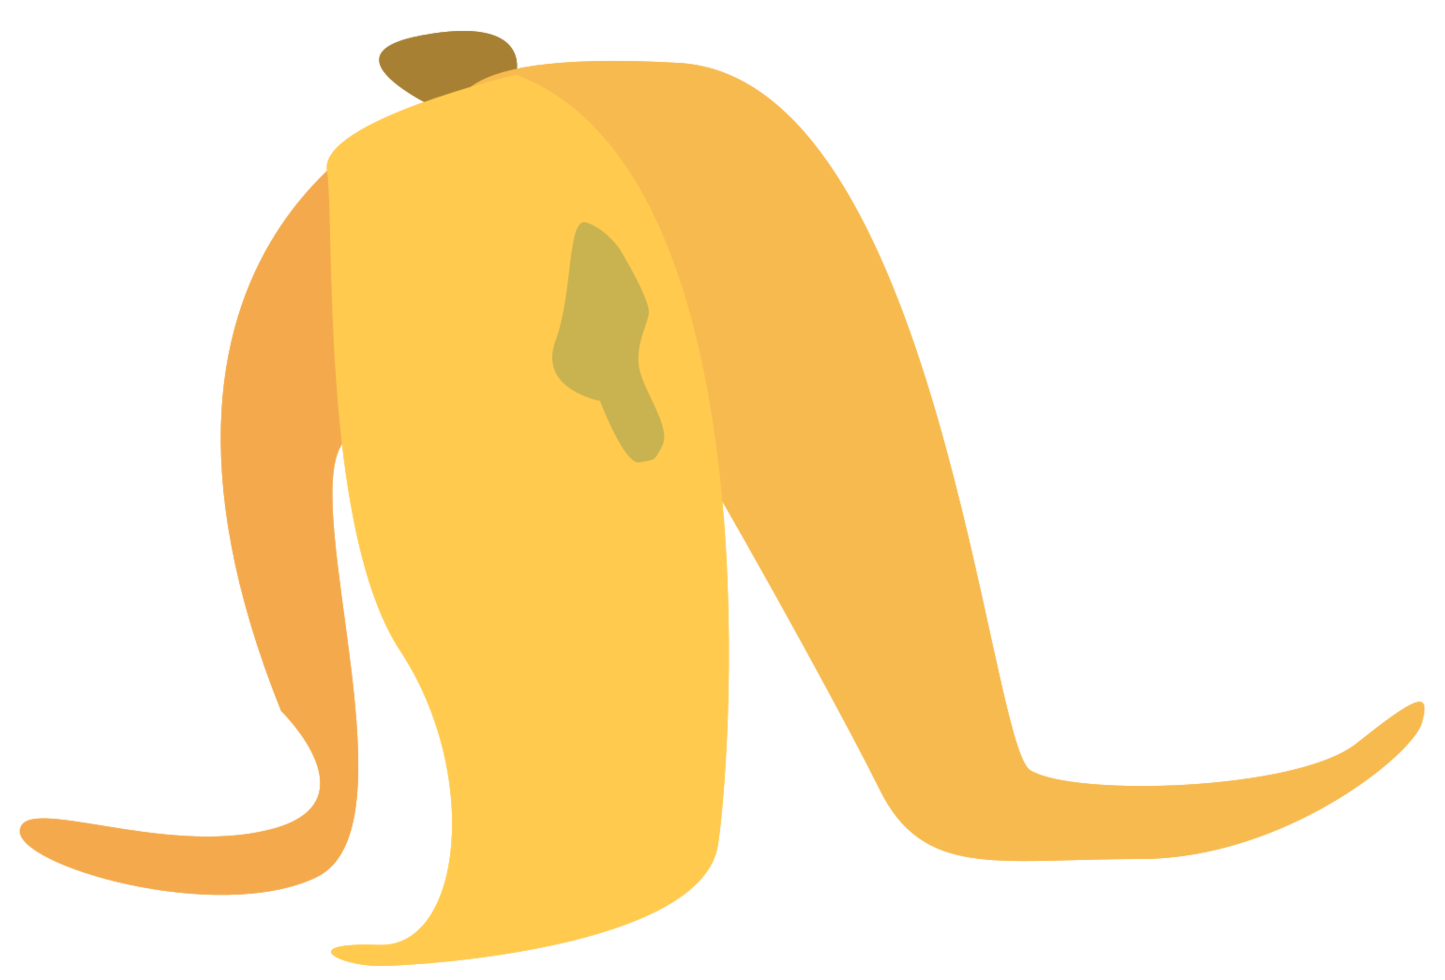 banan png